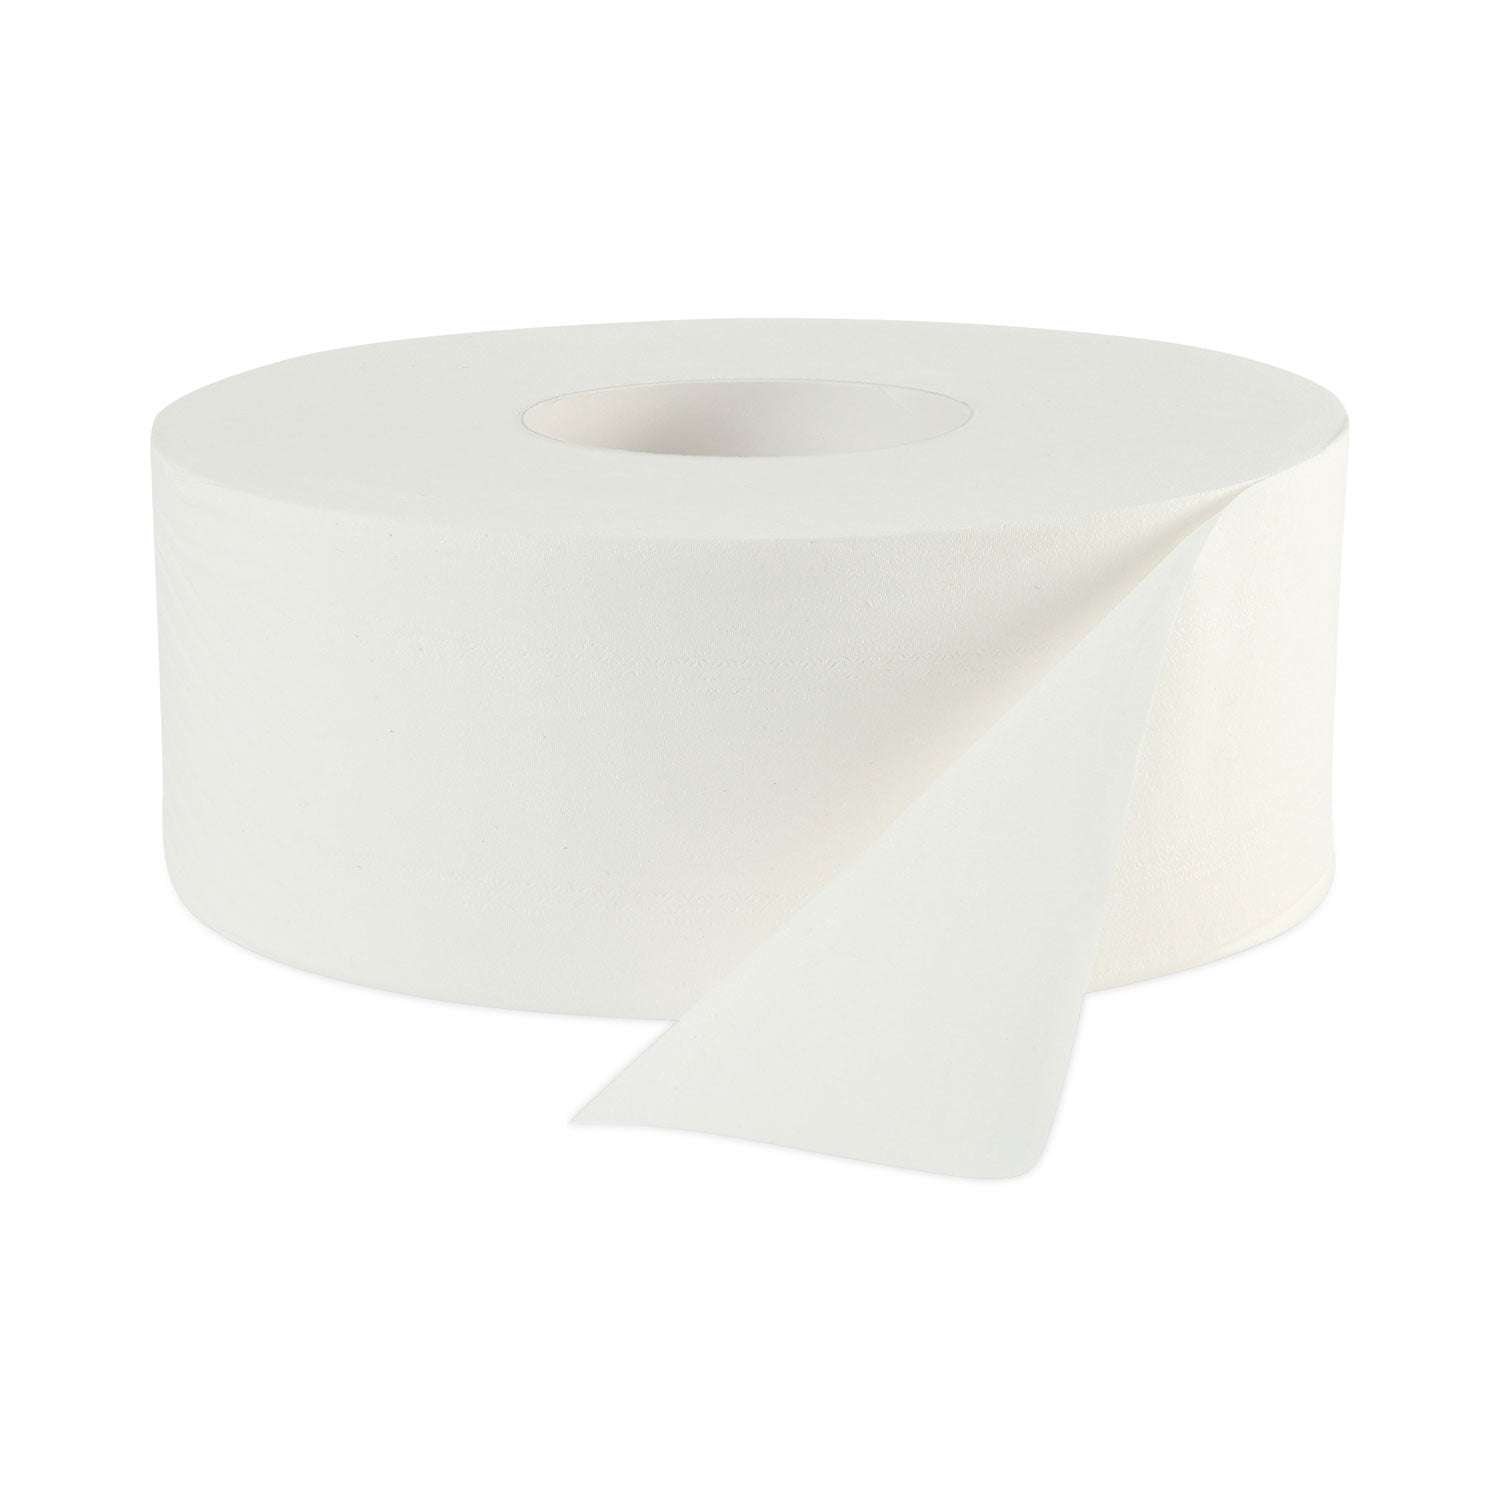 jrt-bath-tissue-jumbo-septic-safe-2-ply-white-33-x-1000-ft-12-rolls-carton_bwk6100b - 1